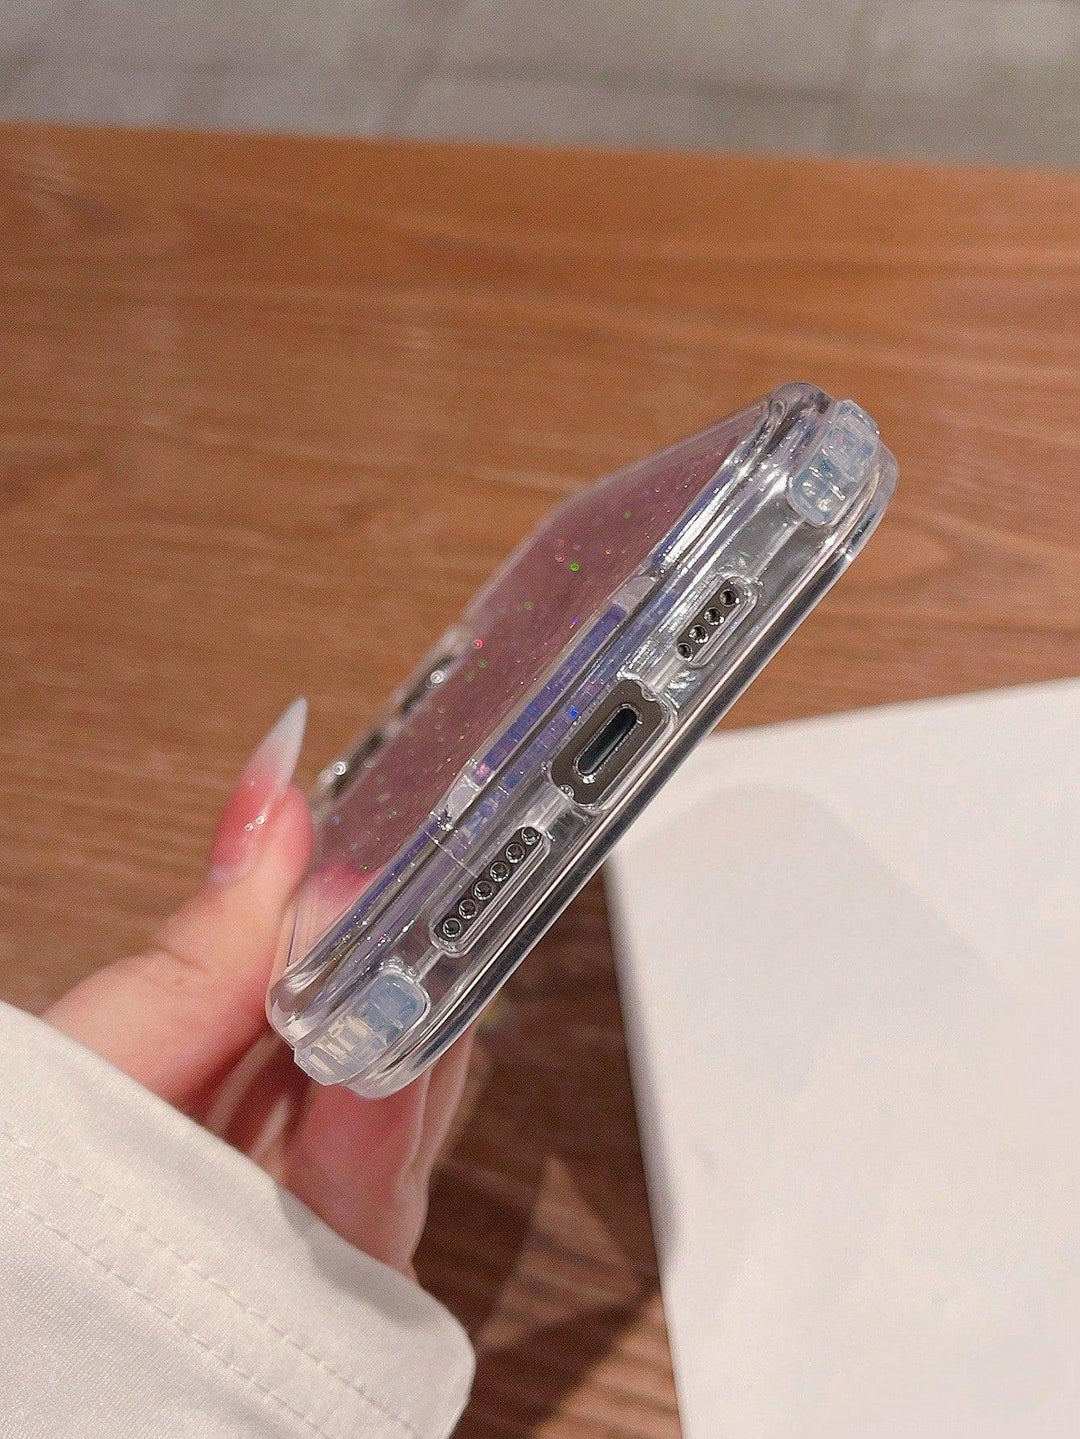 Shiny Sequin Phone Case - Brand My Case